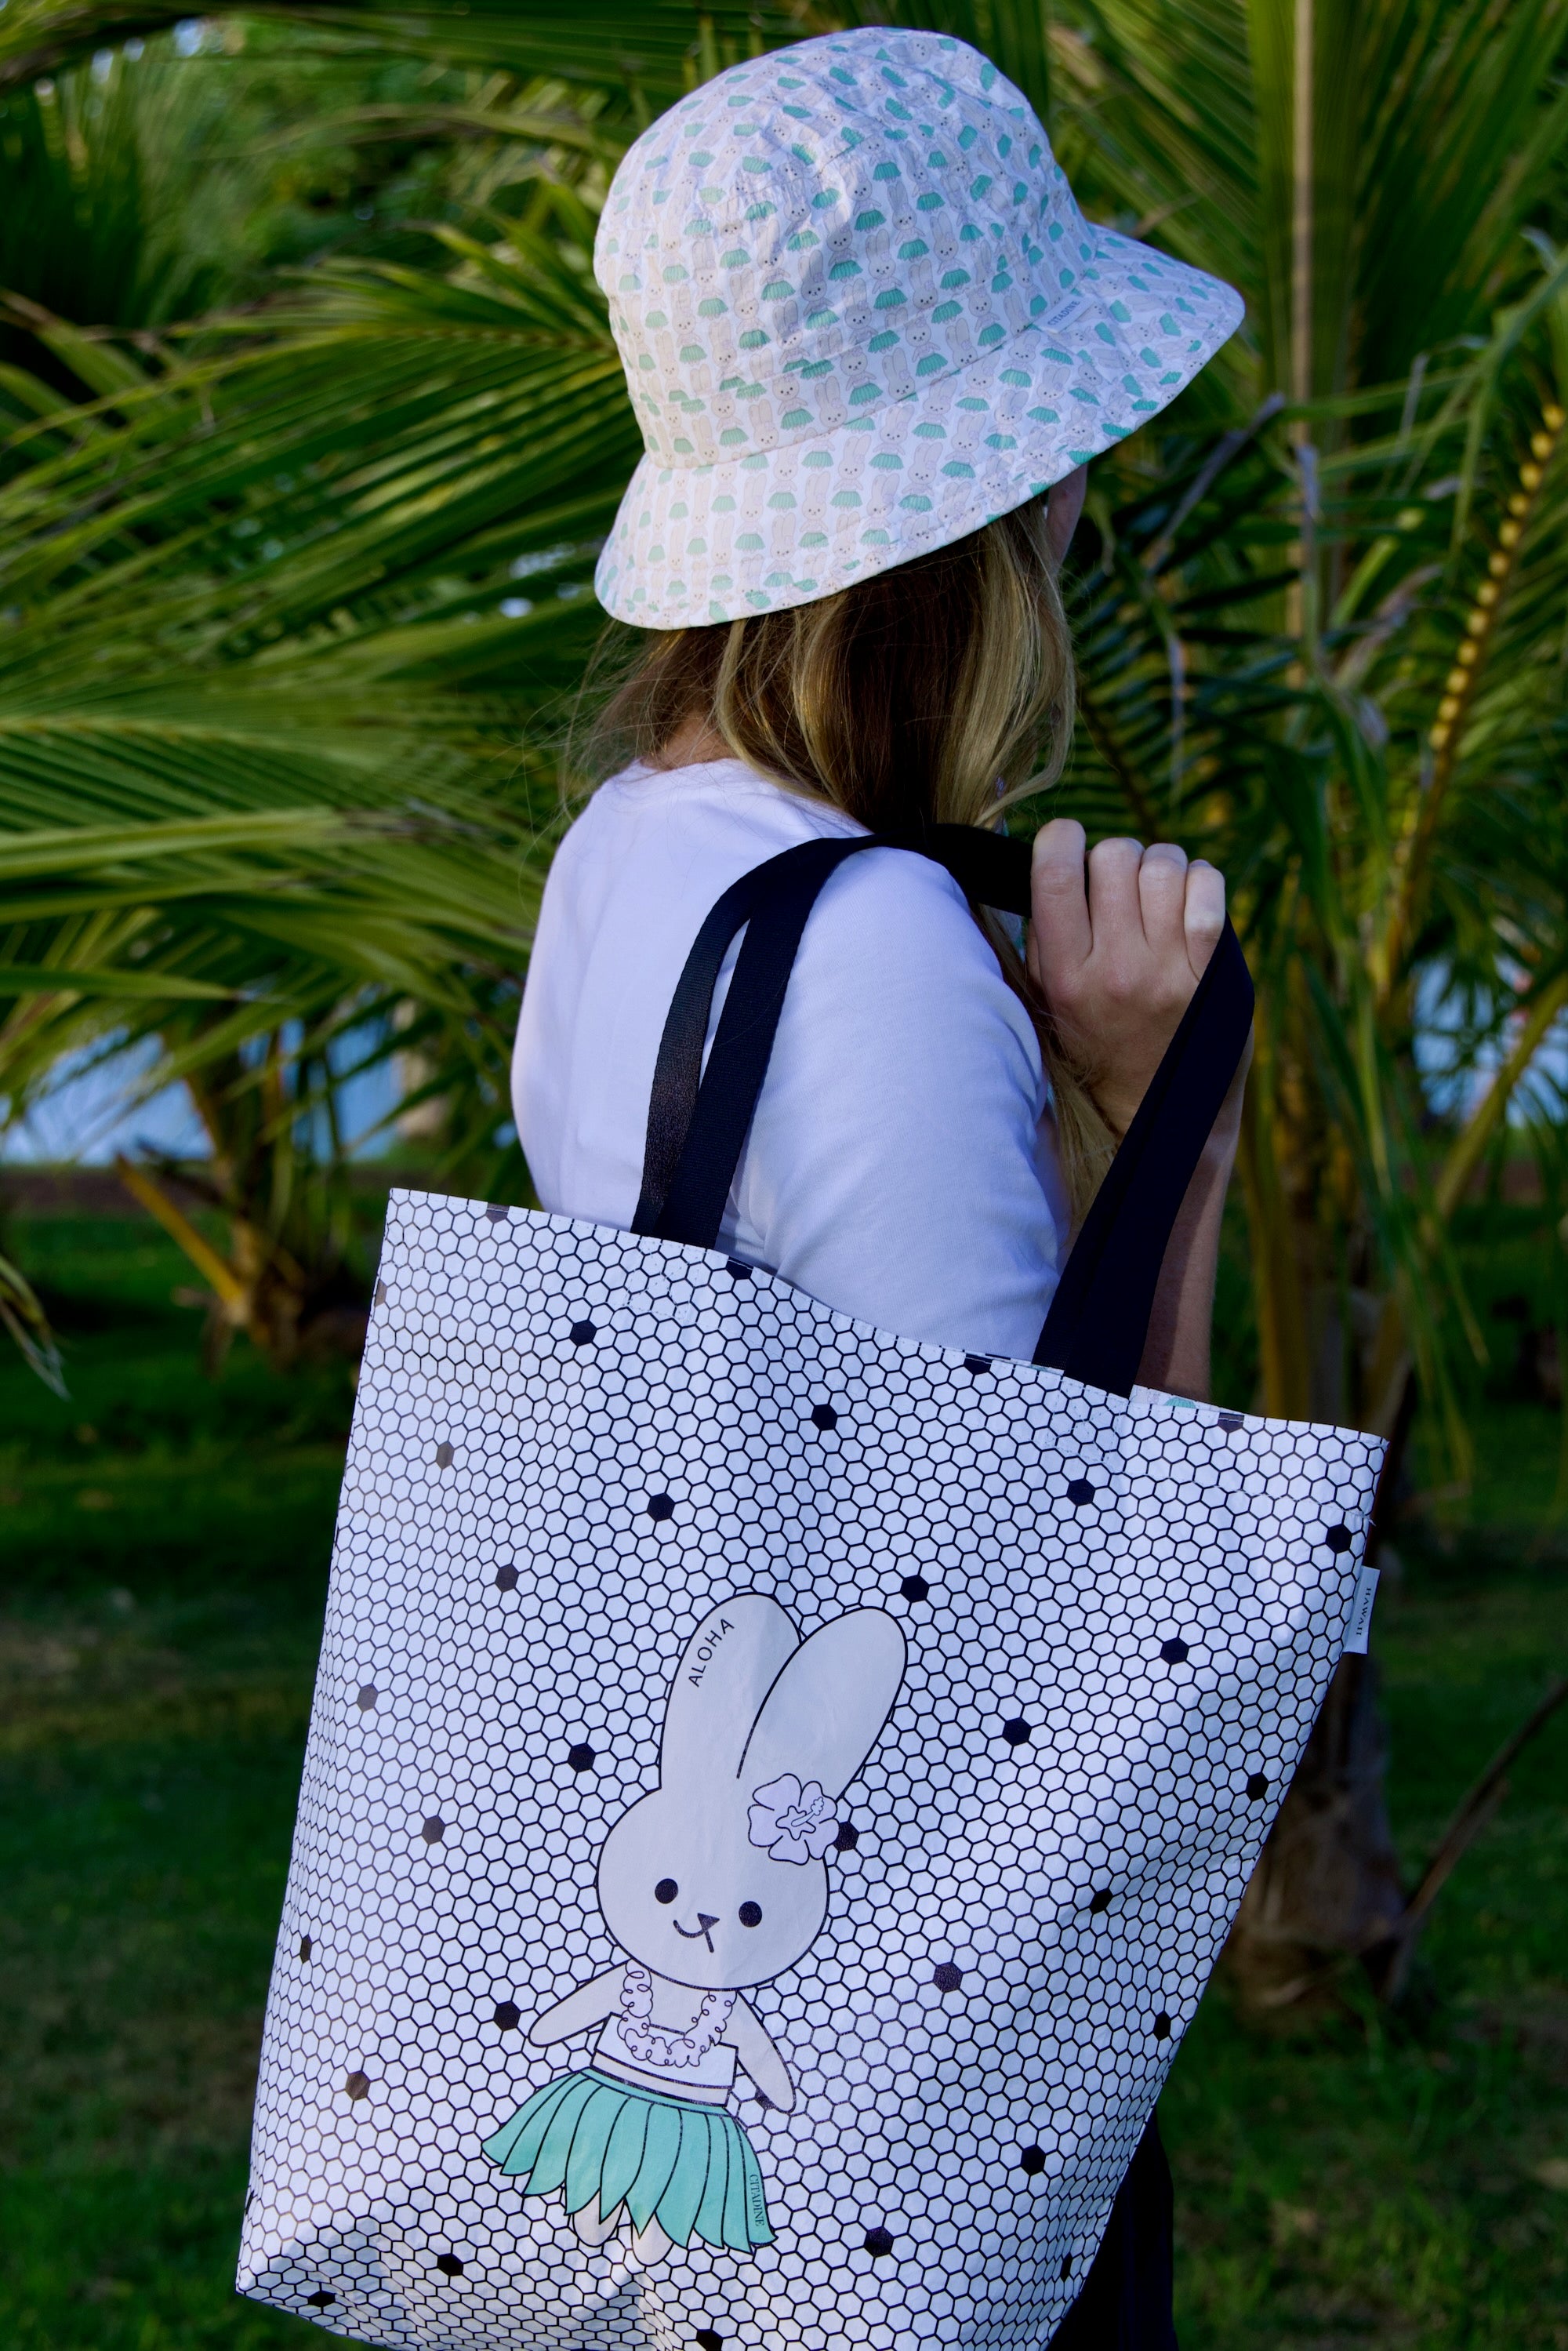 Hawaii-Themed Tote Bags | Atasha Rabbit & Honey Comb Design | Citadine